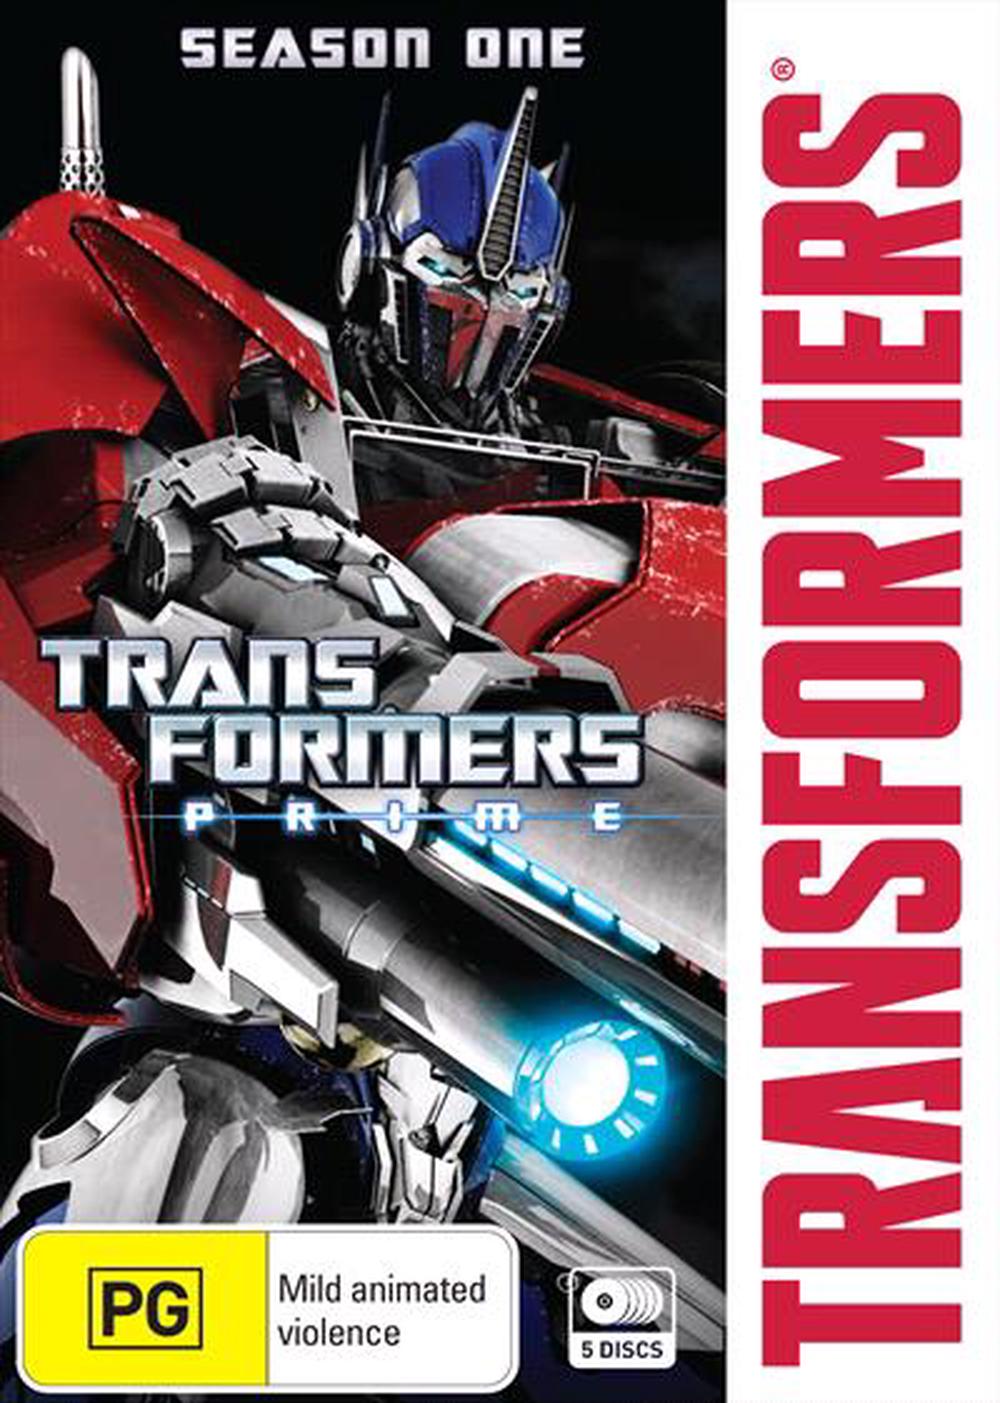 transformers prime season 1 online